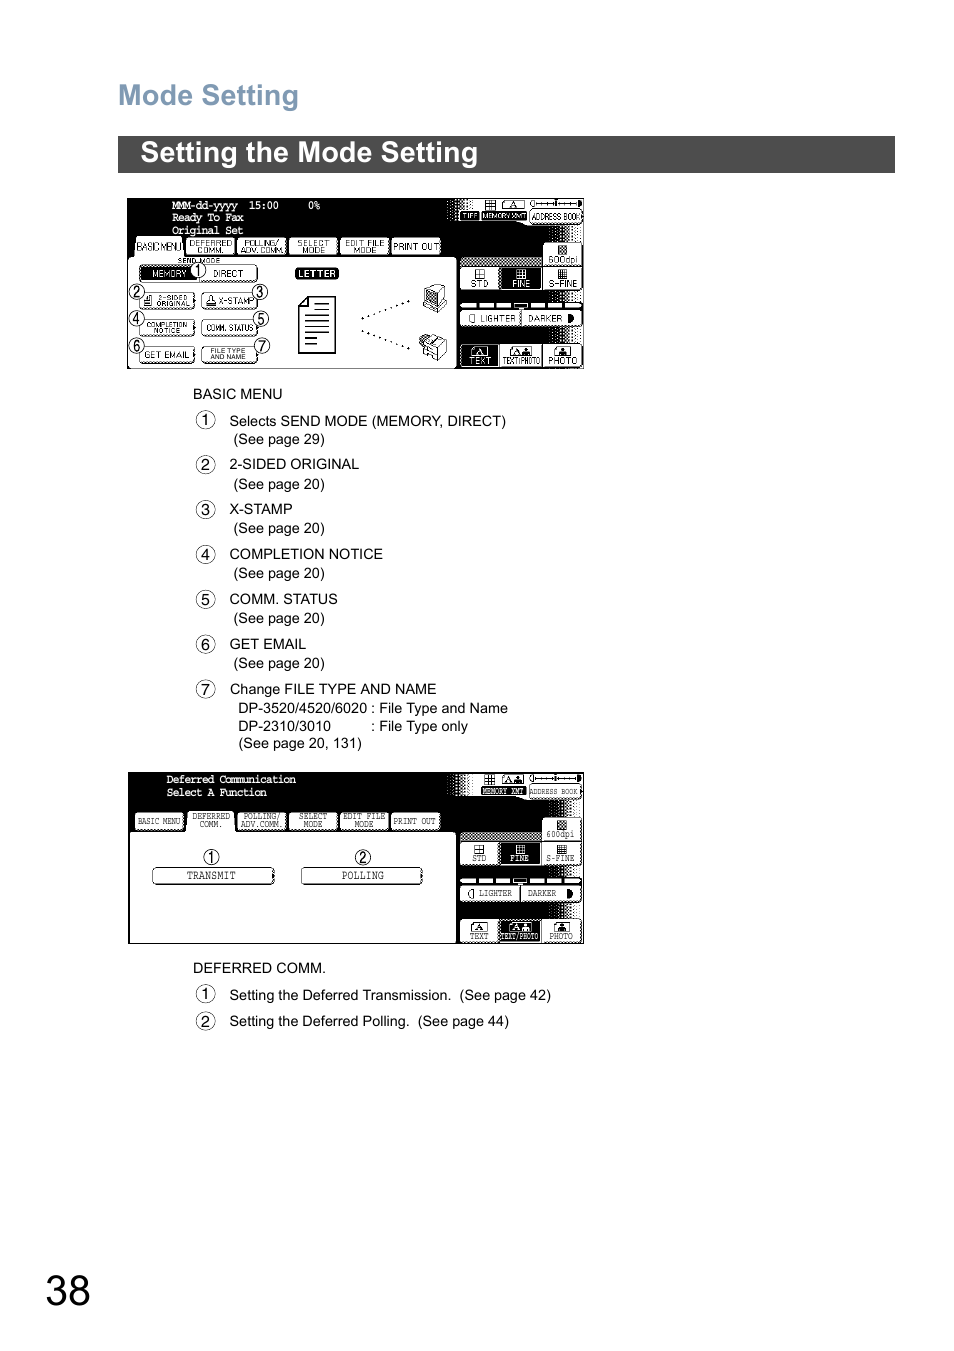 Mode setting, Setting the mode setting | Panasonic DP-3010 Manuel d'utilisation | Page 38 / 234